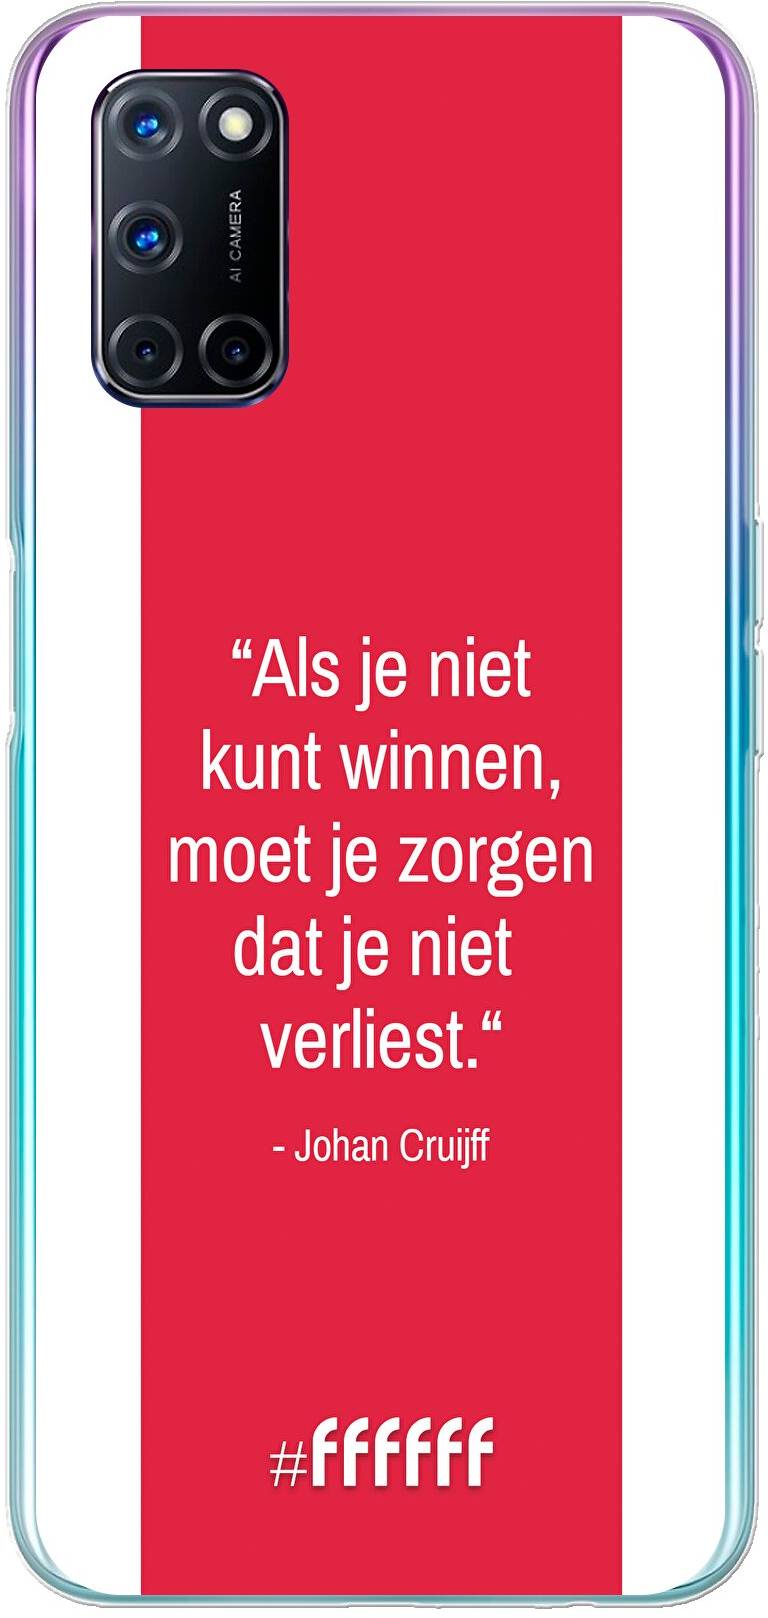 AFC Ajax Quote Johan Cruijff A92